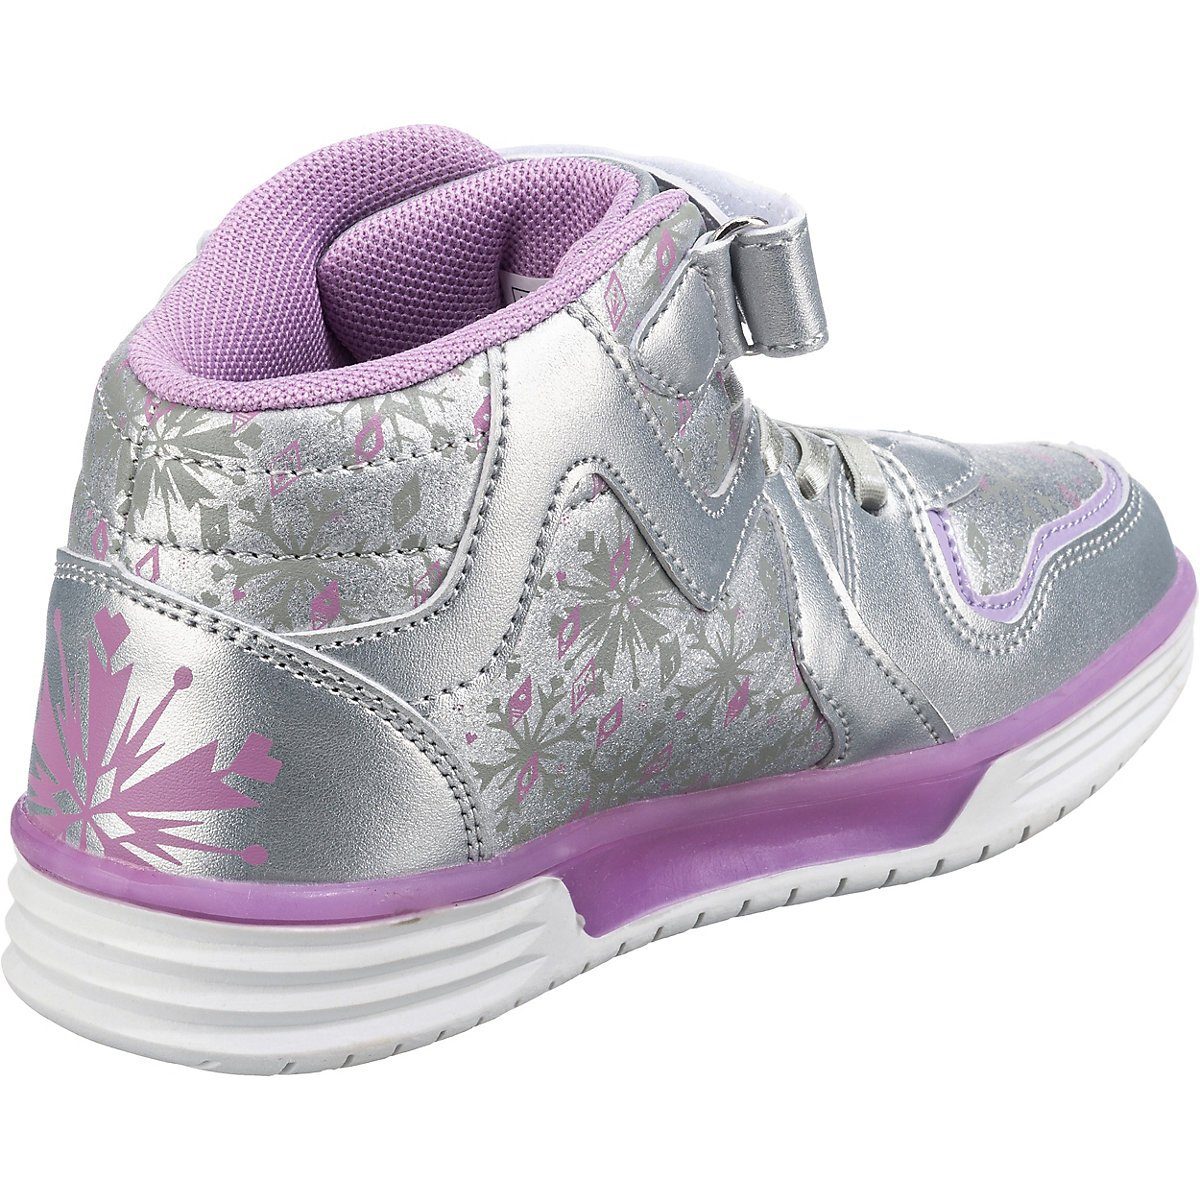 Schuhe Alle Sneaker Disney Frozen Disney Die Eiskönigin Sneakers High Blinkies für Sneaker